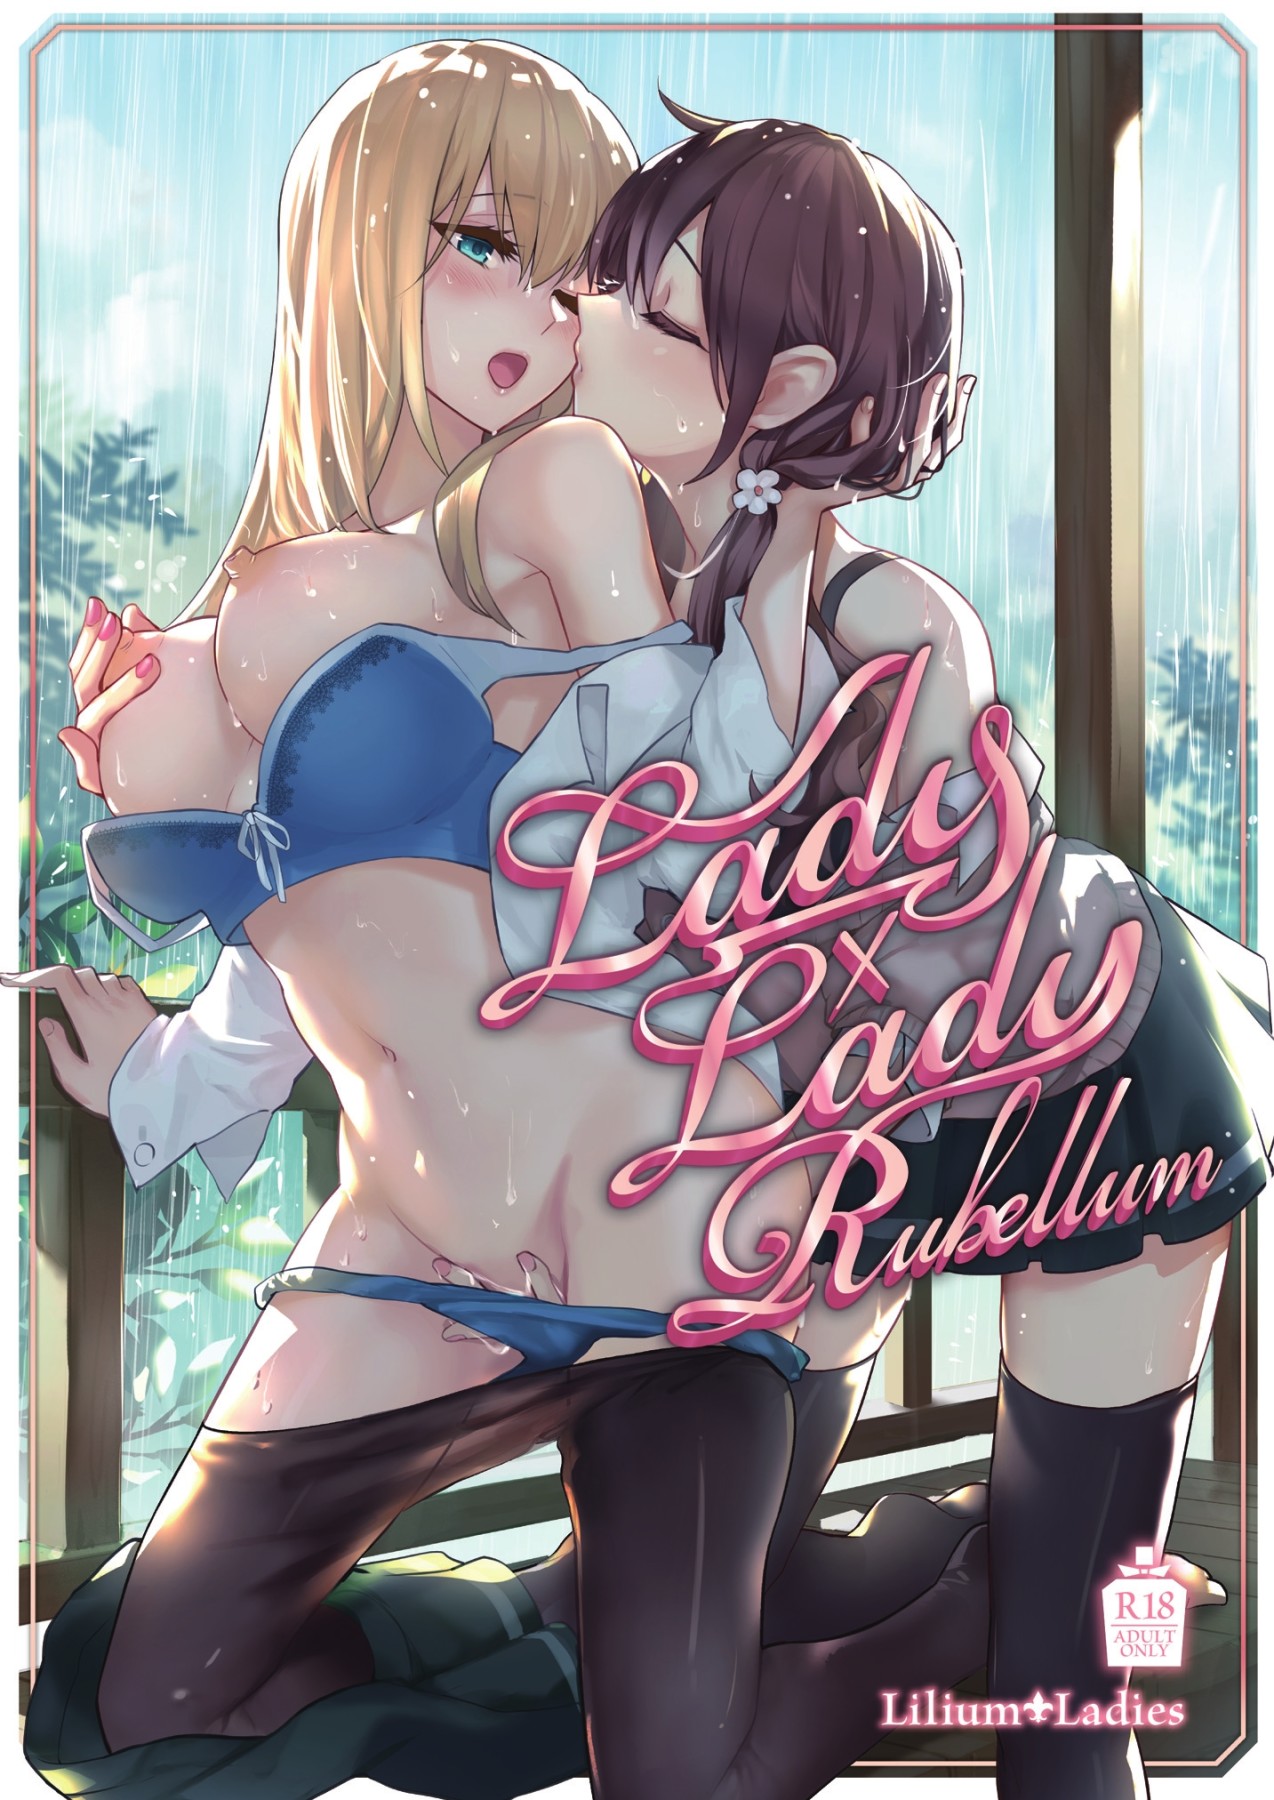 Hentai Manga Comic-Lady x Lady Rubellum-Read-1